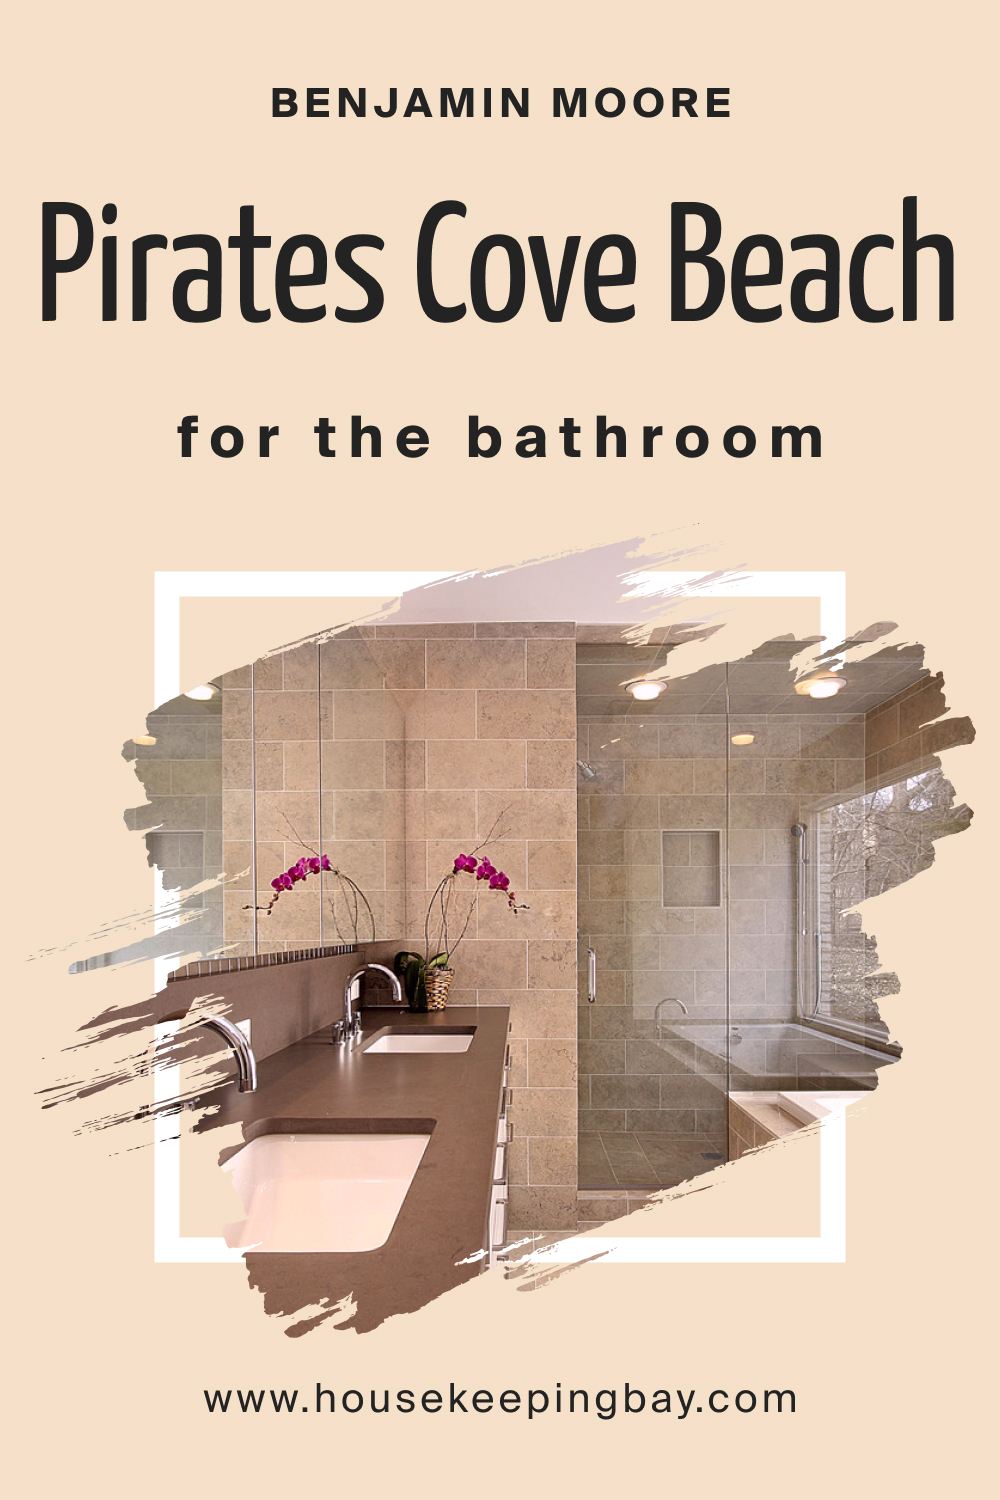 Benjamin Moore. Pirates Cove Beach OC 80 for the Bathroom